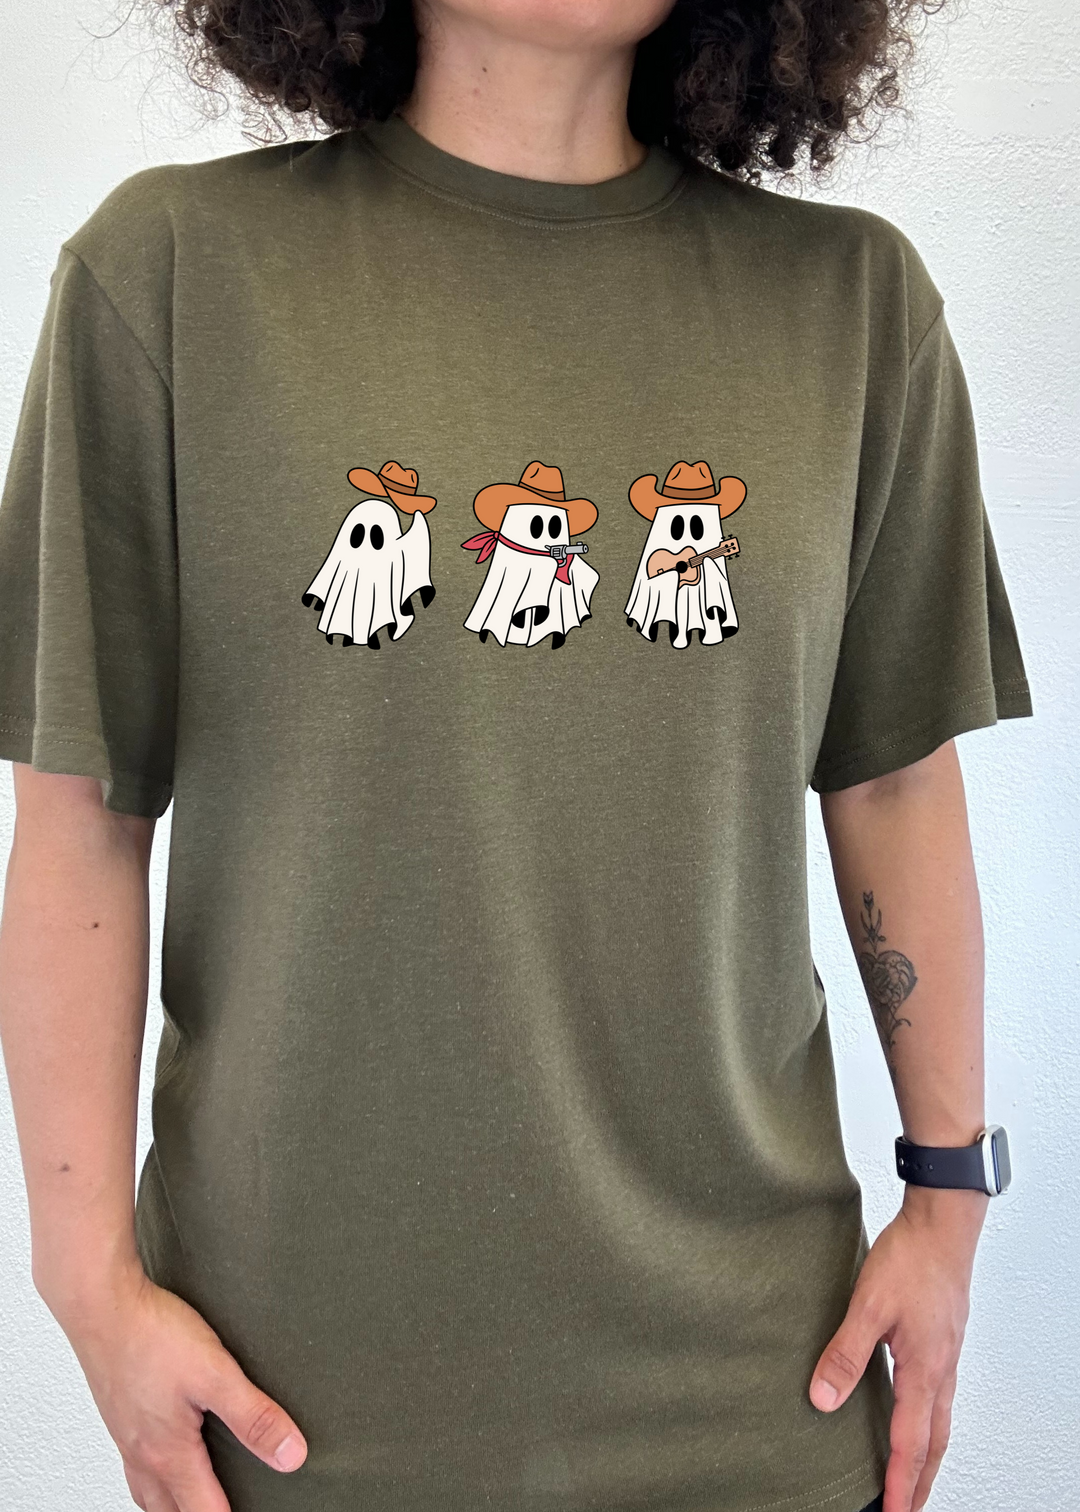 Cowboy Ghosts Unisex Bamboo Viscose/Organic Cotton Short Sleeve Graphic T-Shirt